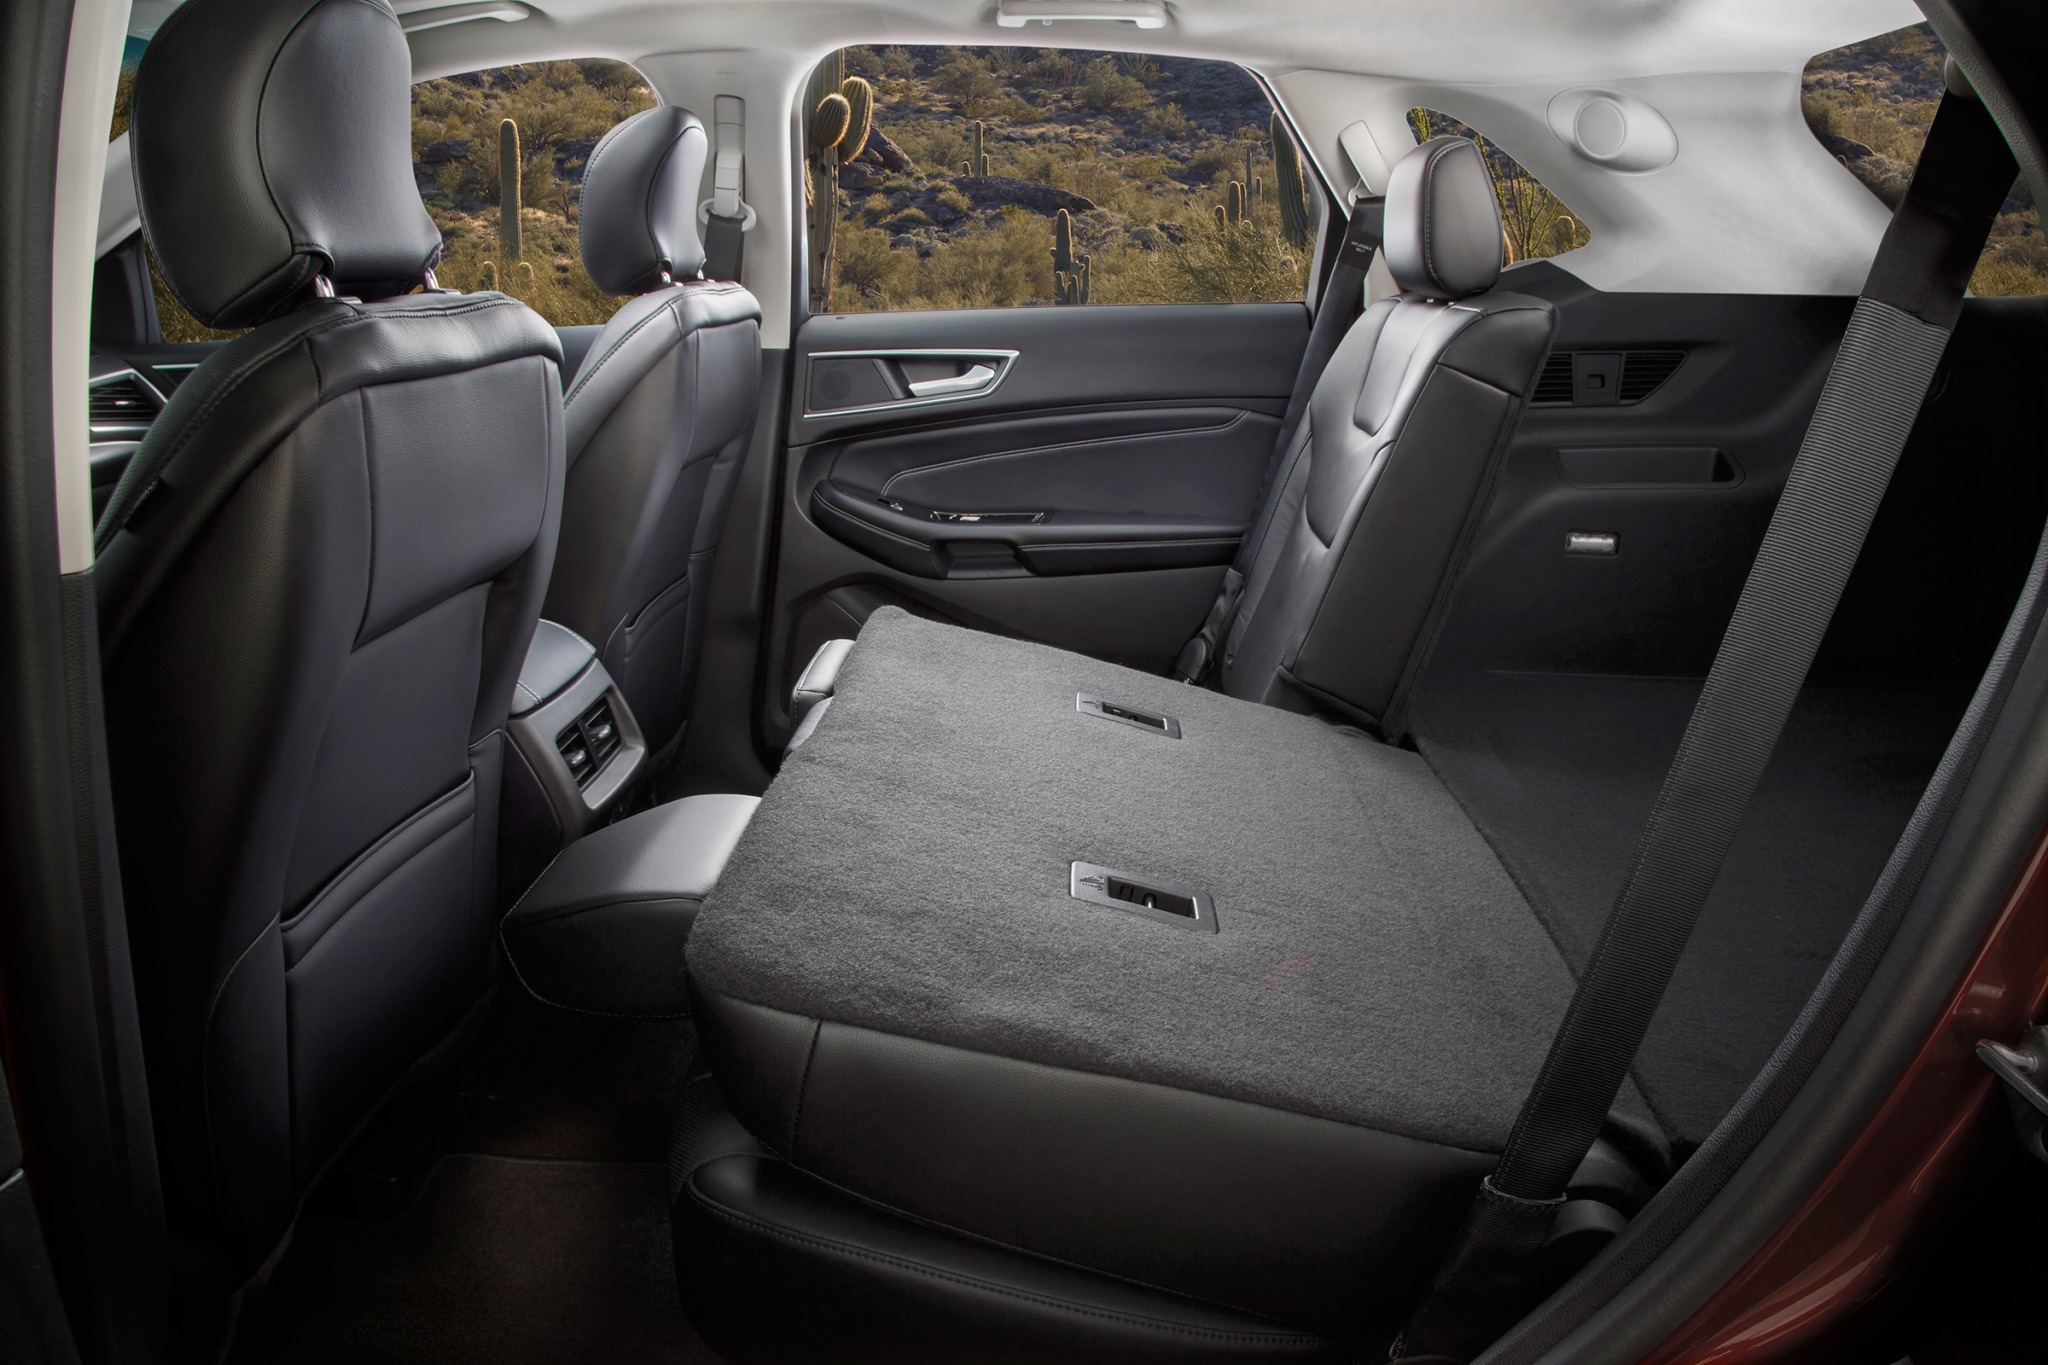 2021 ford edge interior pictures